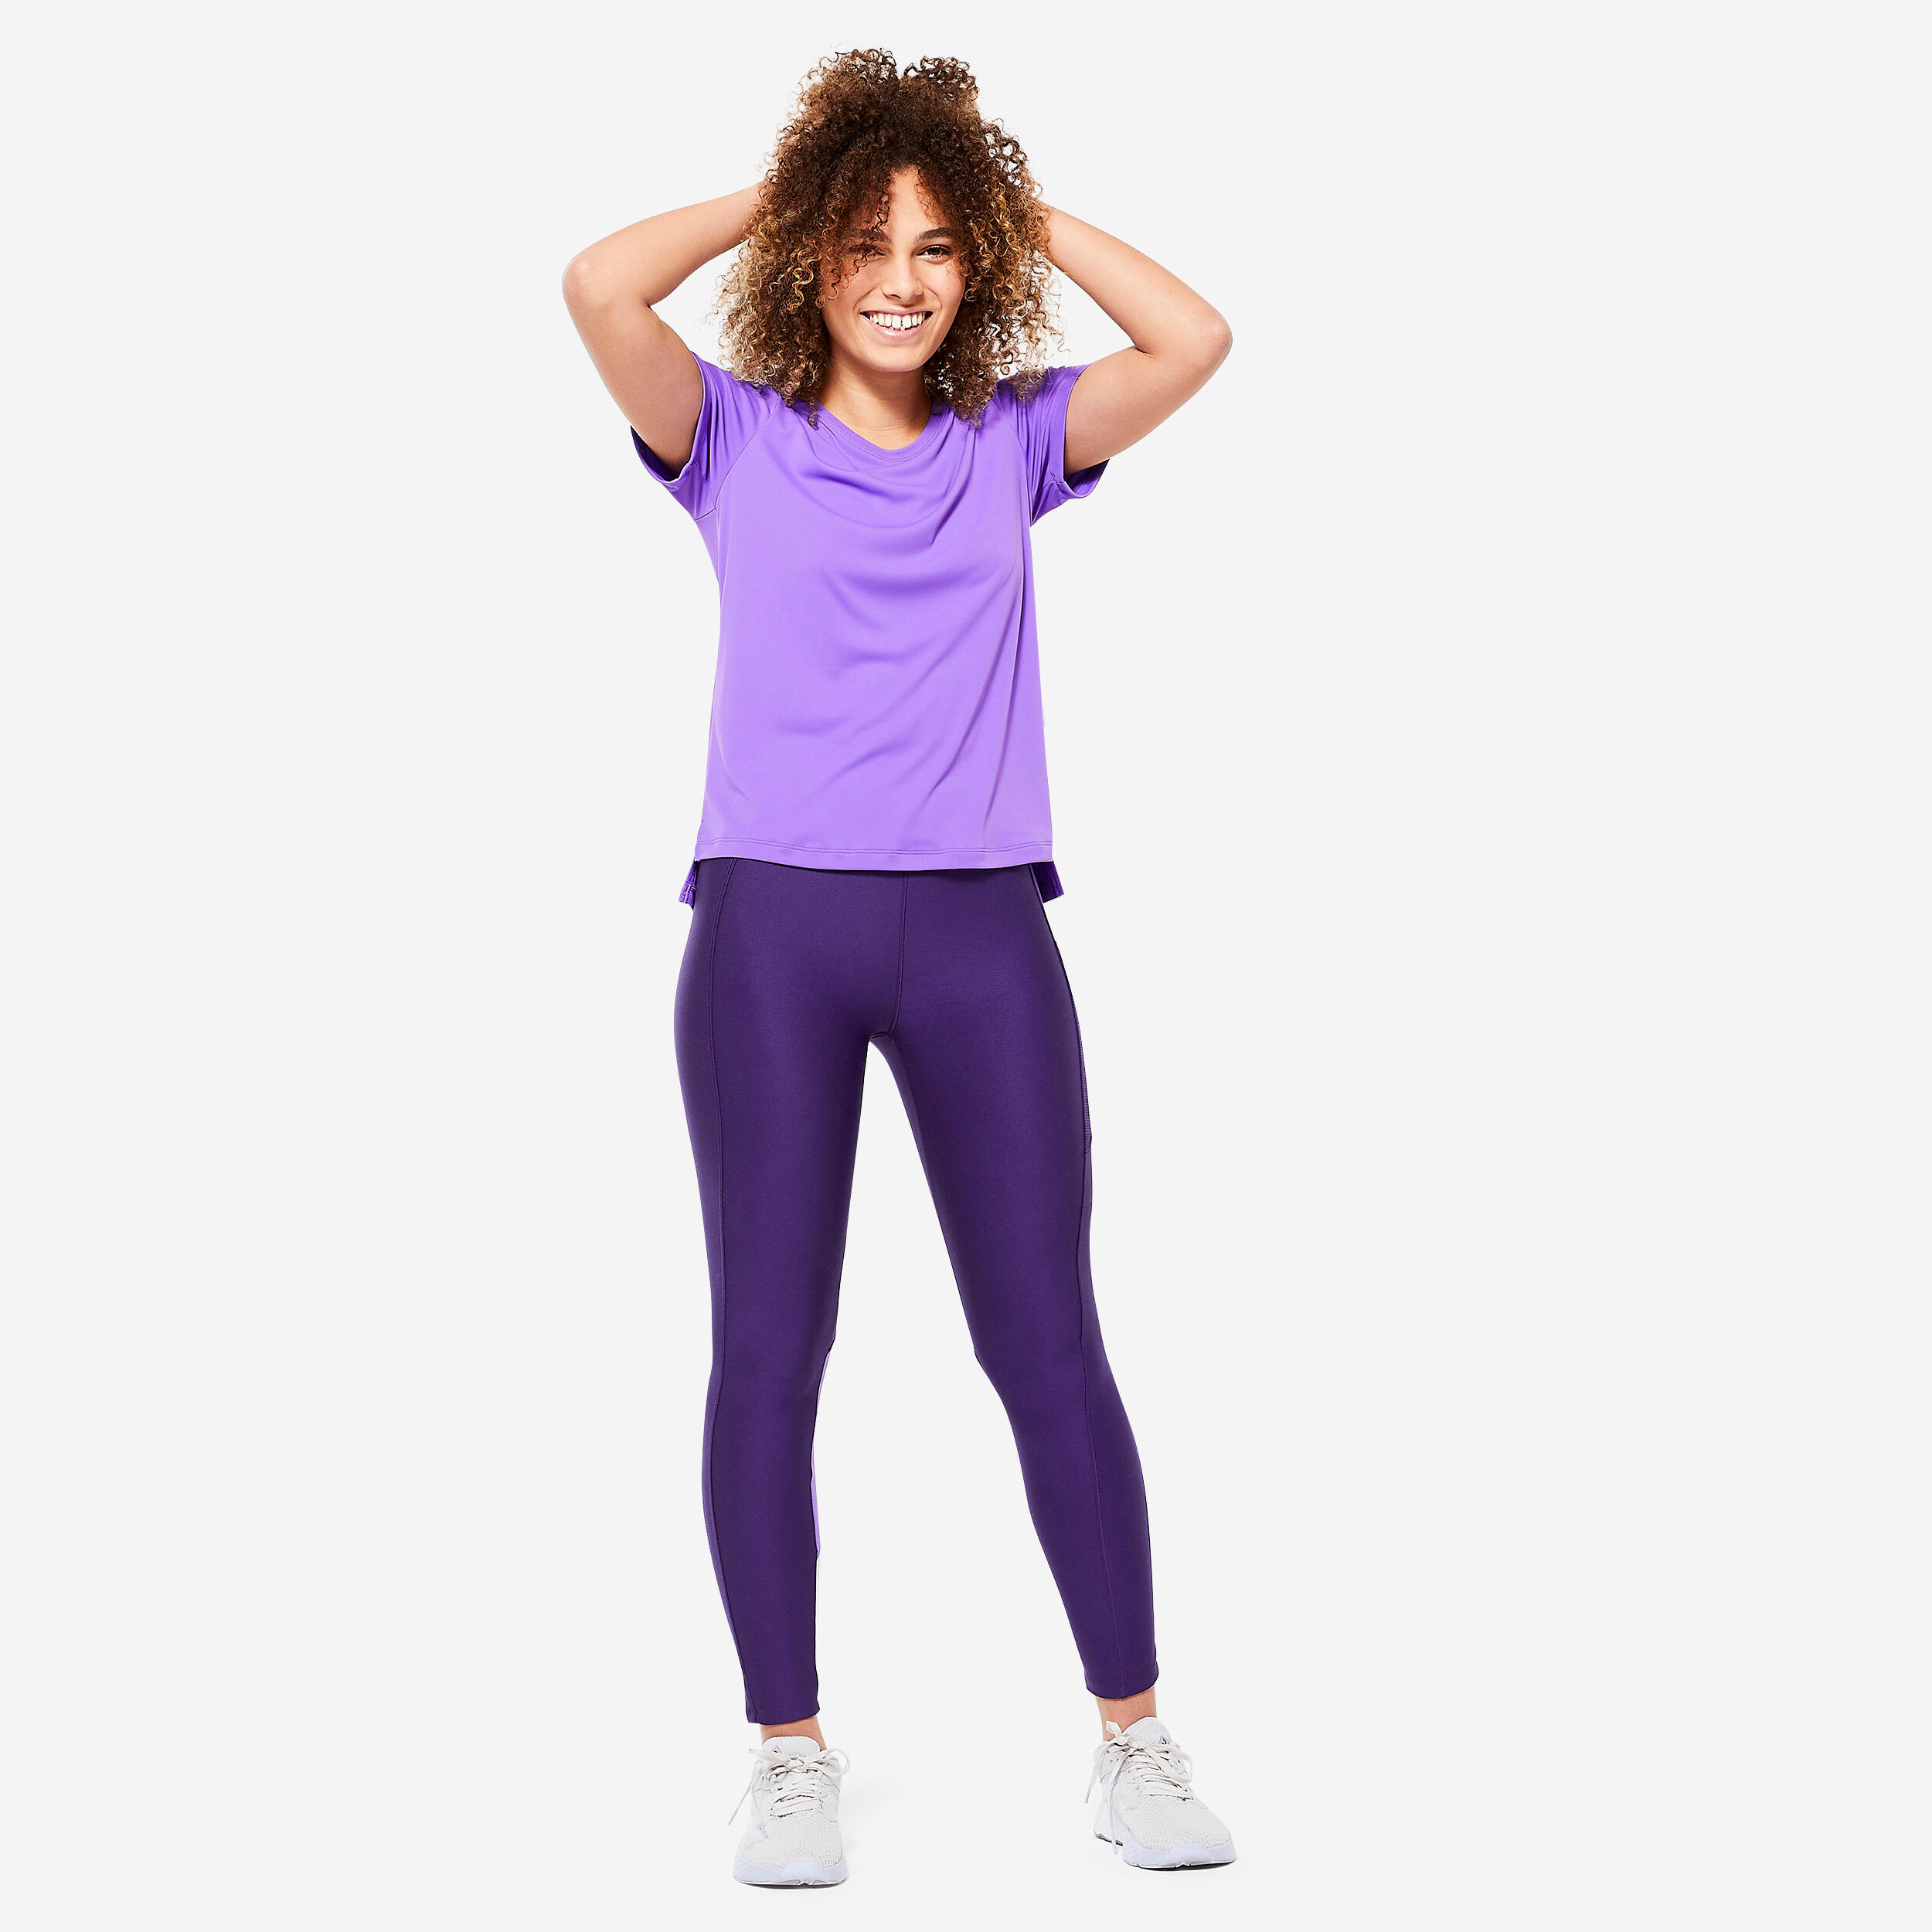 Women's Short-Sleeved Cardio Fitness T-Shirt - Purple 2/6